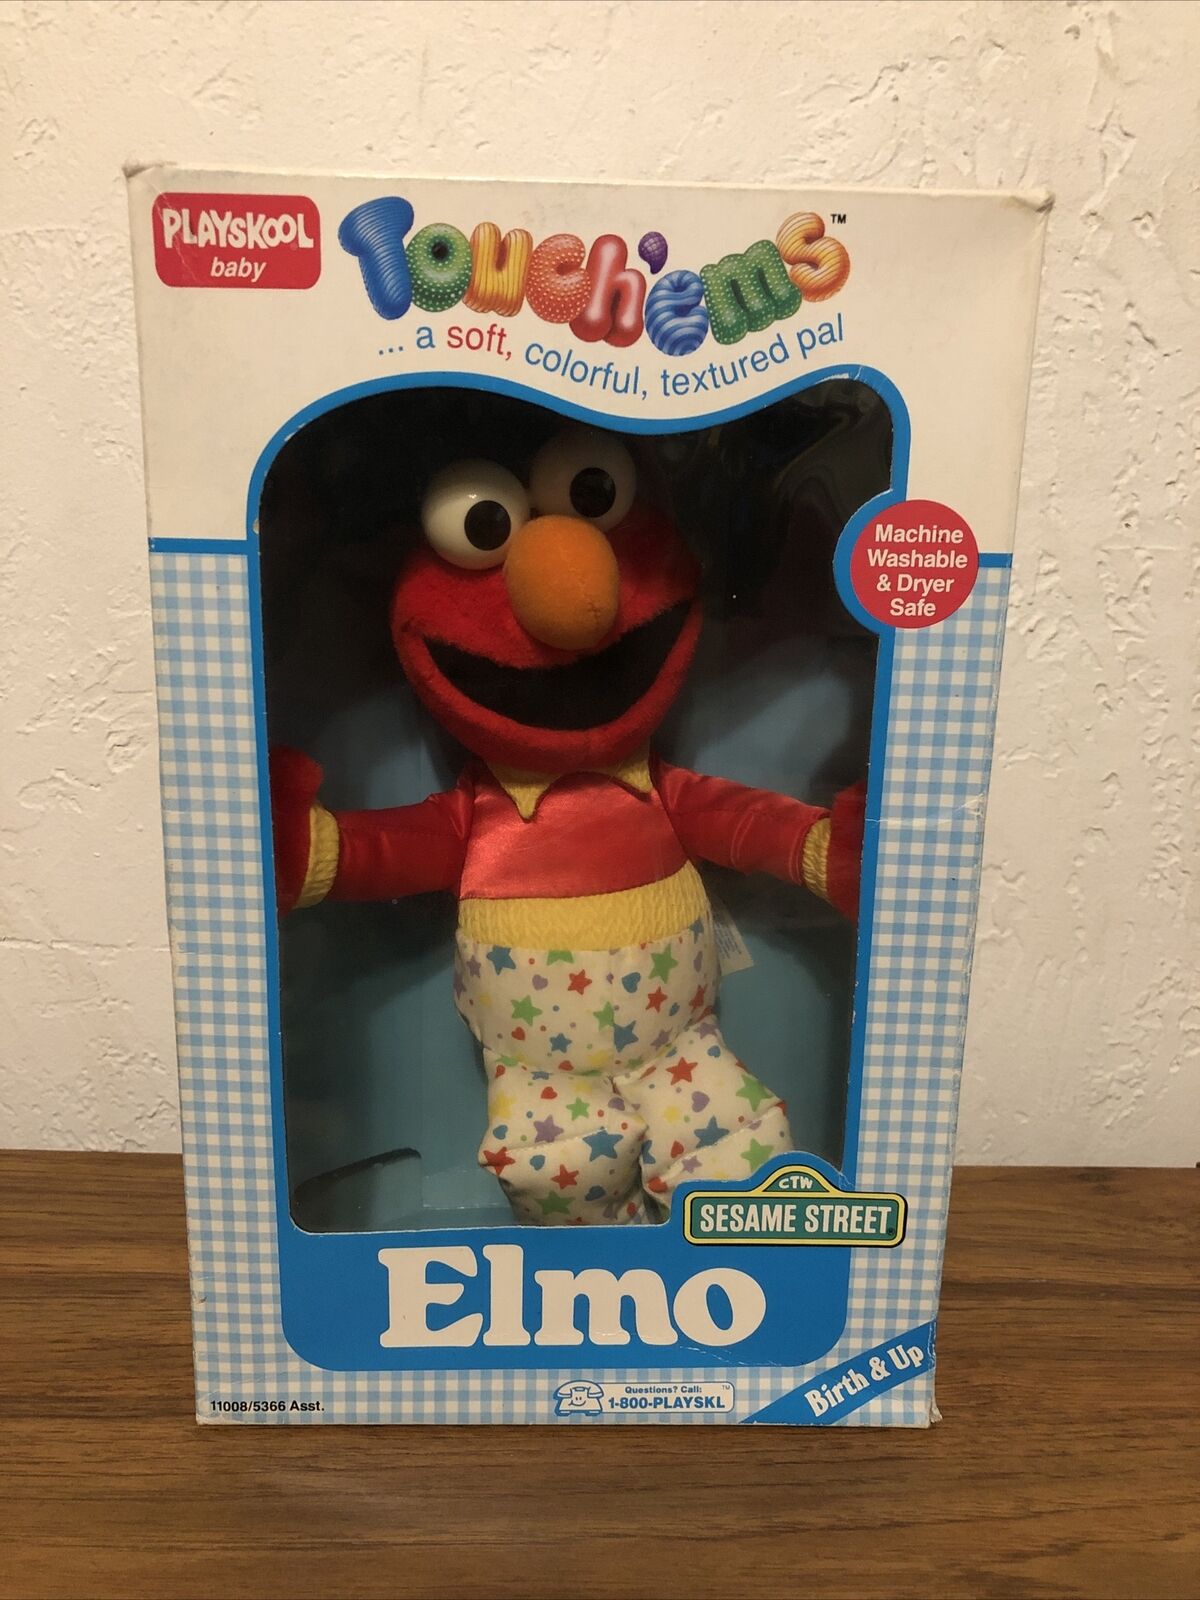 Vintage 1991 Hasbro Playskool Touch 'ems Baby Elmo Plush By Jim Henson